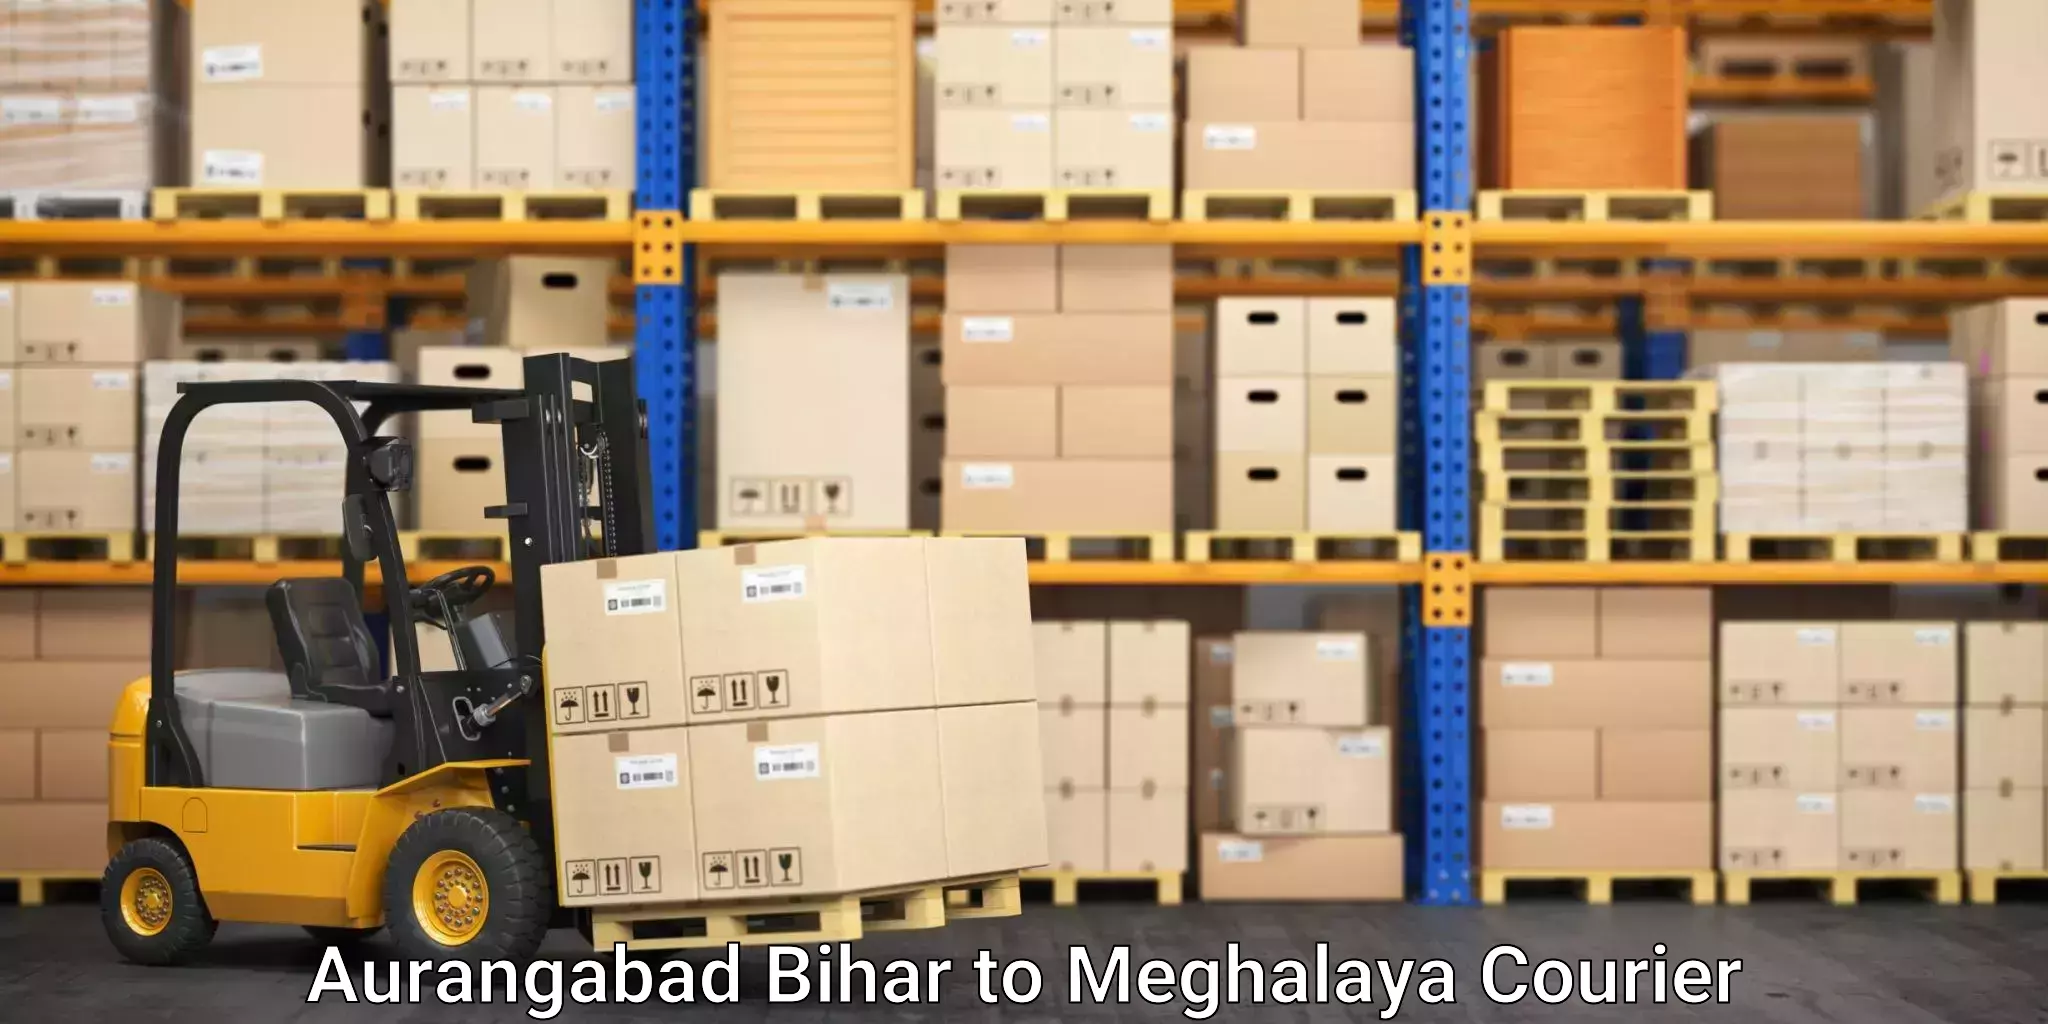 High-quality moving services Aurangabad Bihar to Shillong